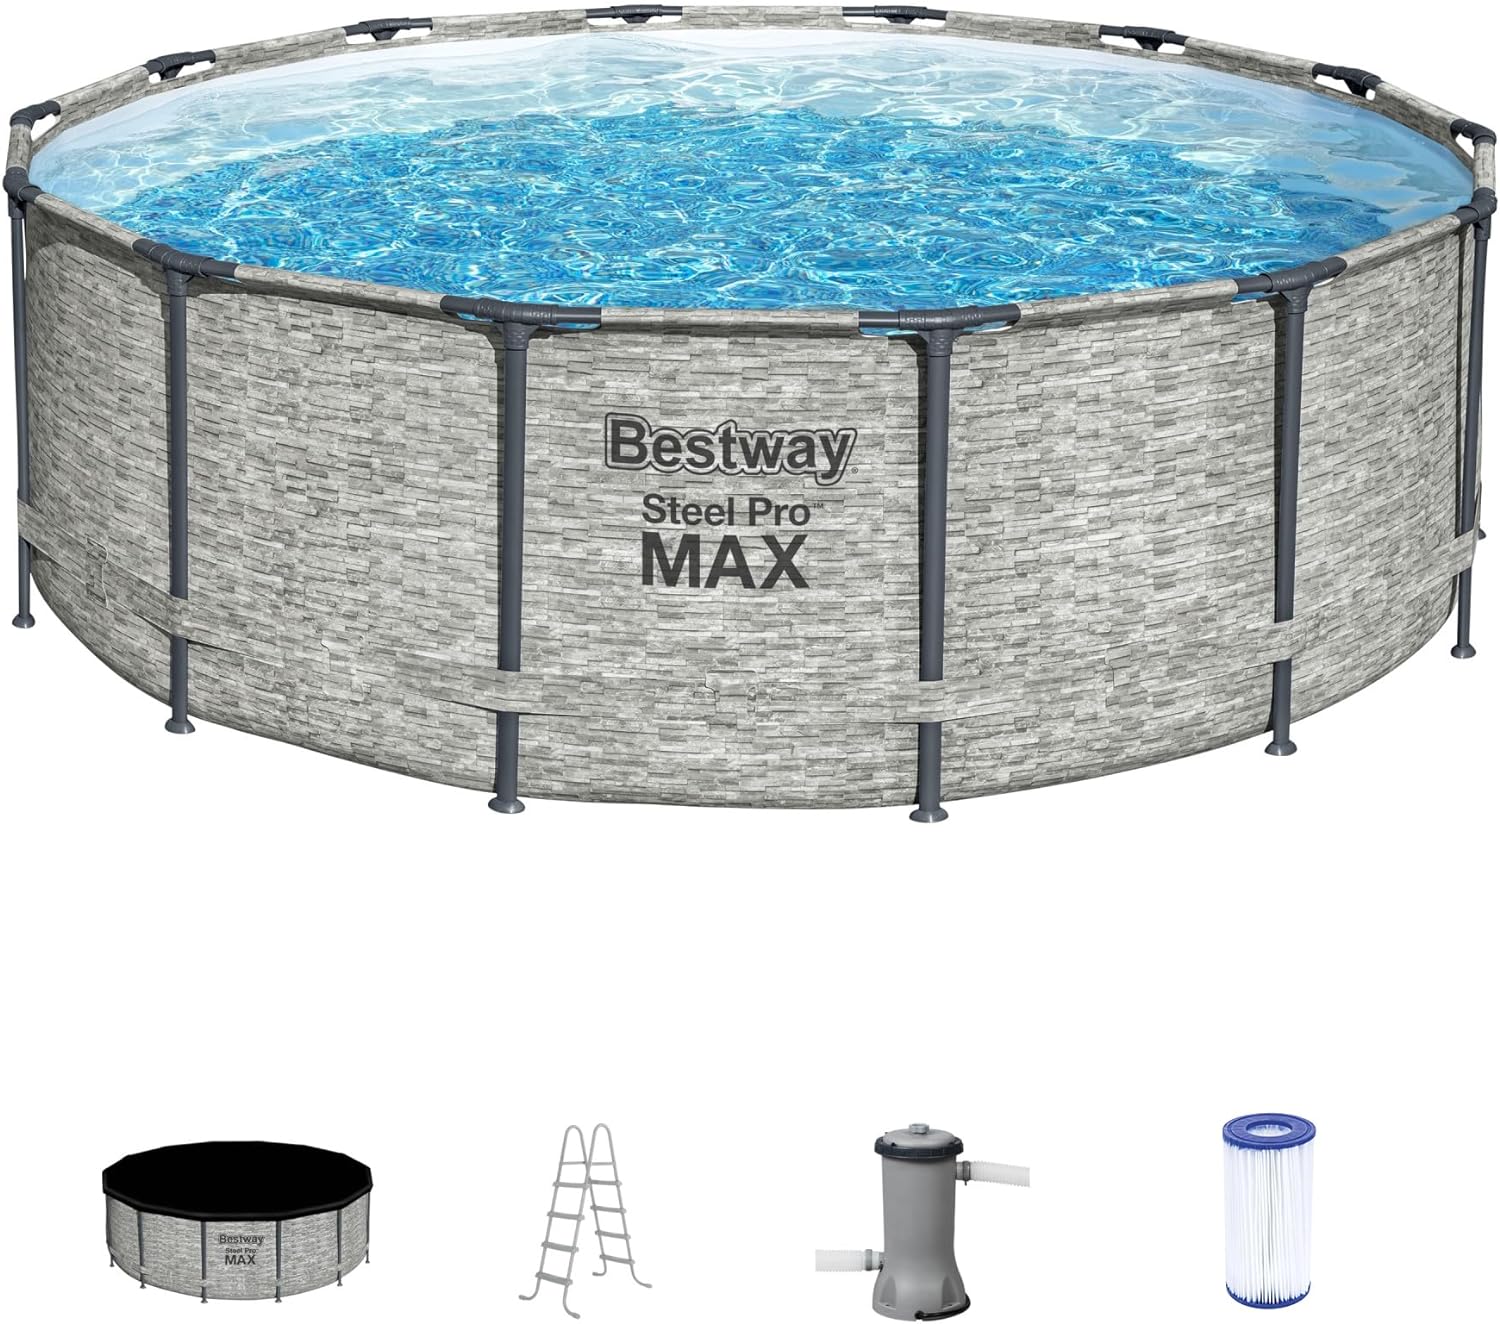 Bestway Steel Pro MAX 14 x 48 Inch Round Above Ground Swimming Pool - $240